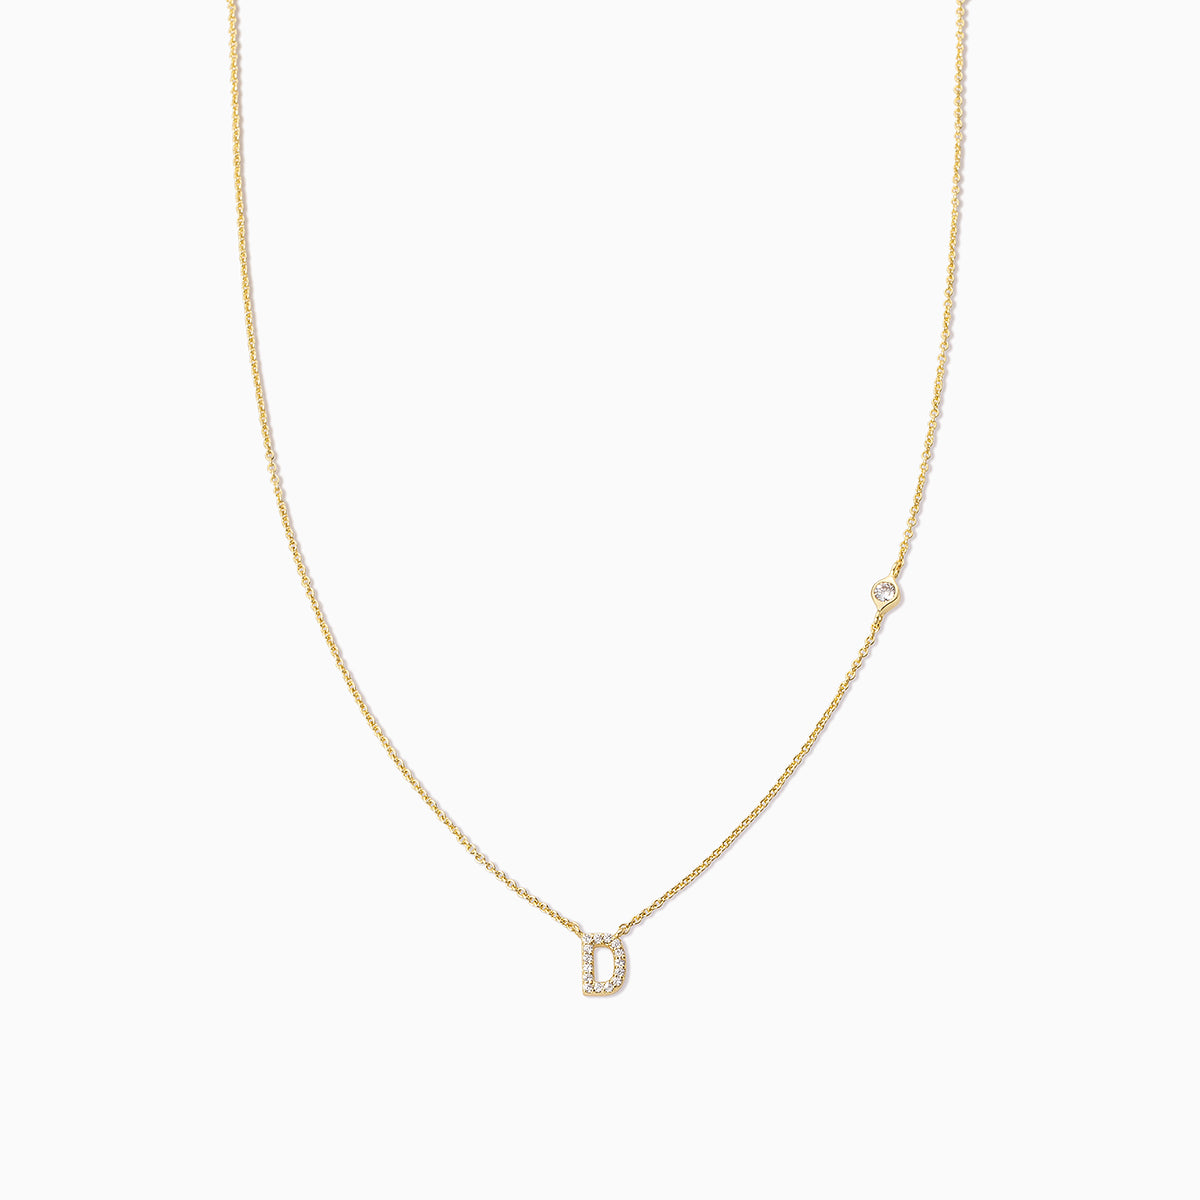 Pavé Initial Necklace | Gold D | Product Image | Uncommon James